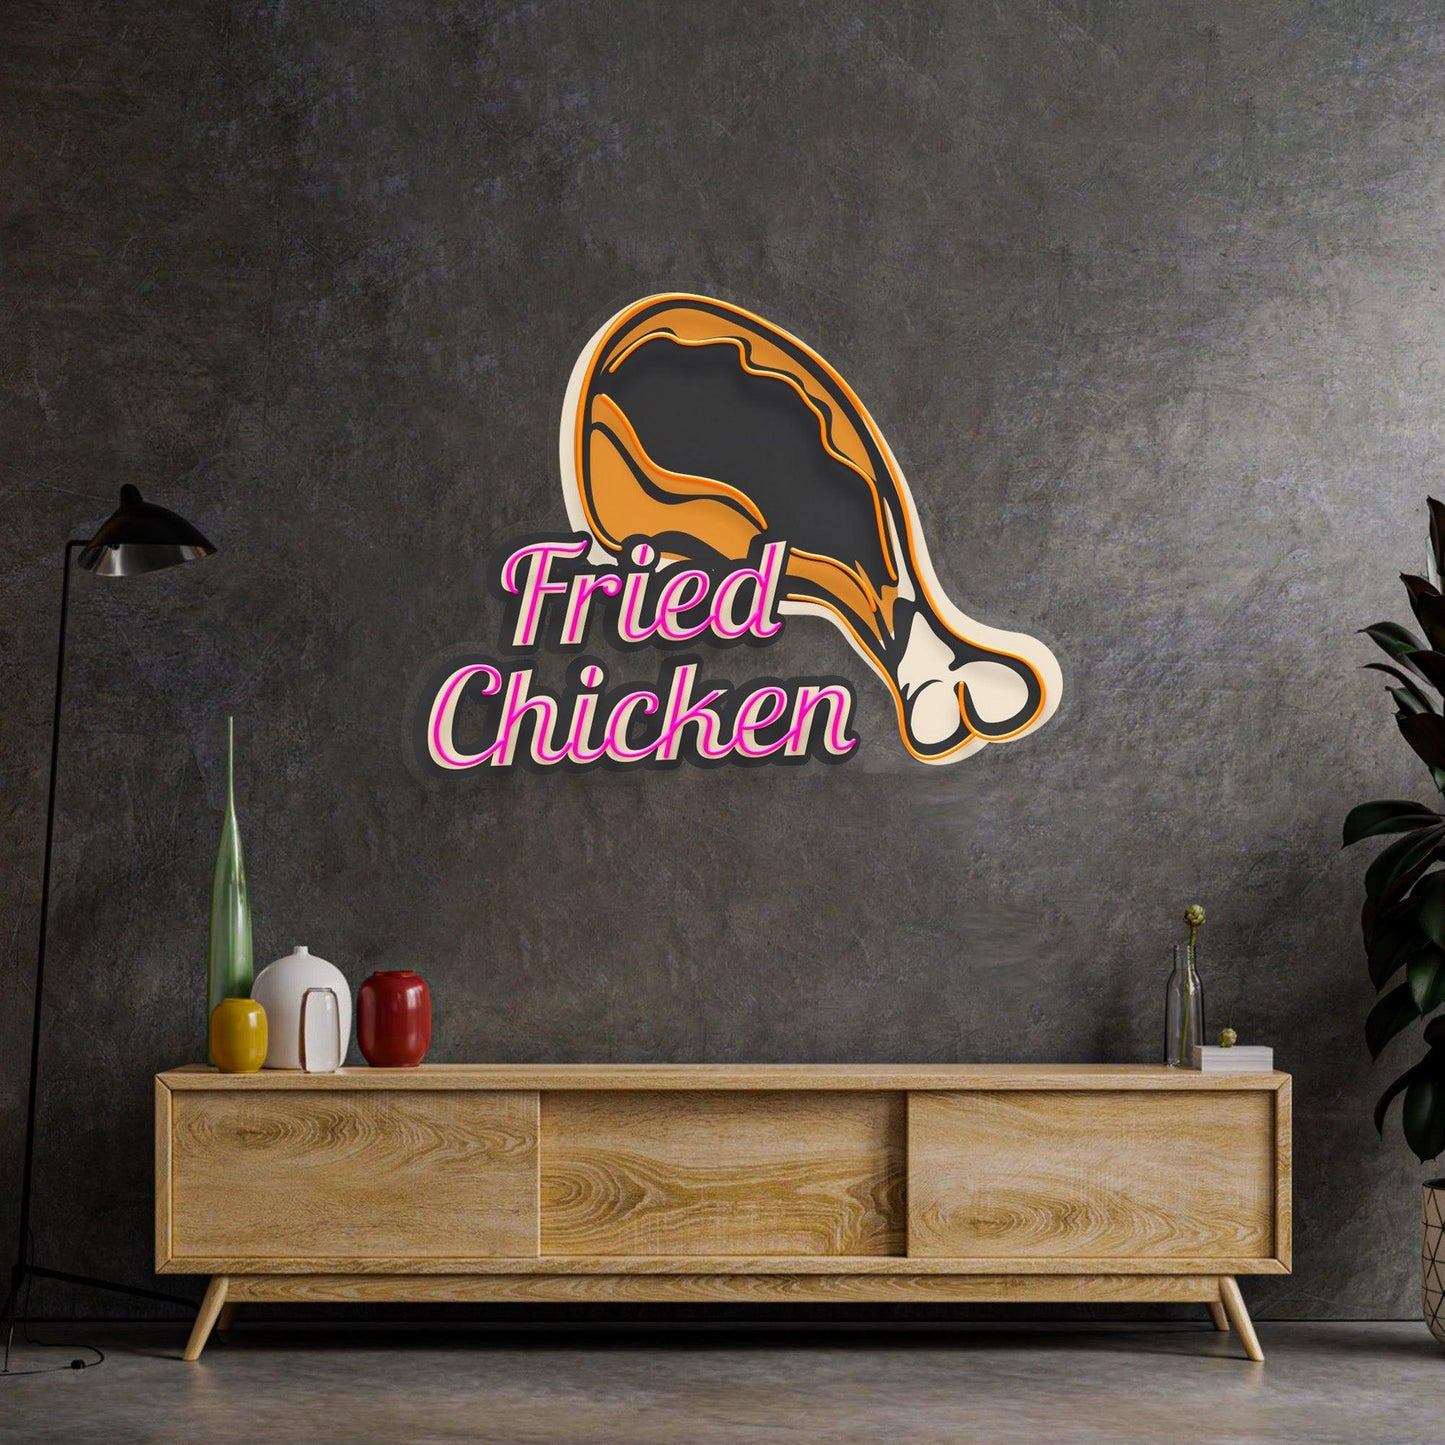 Fried Chicken Led Neon Acrylic Artwork - Neonzastudio